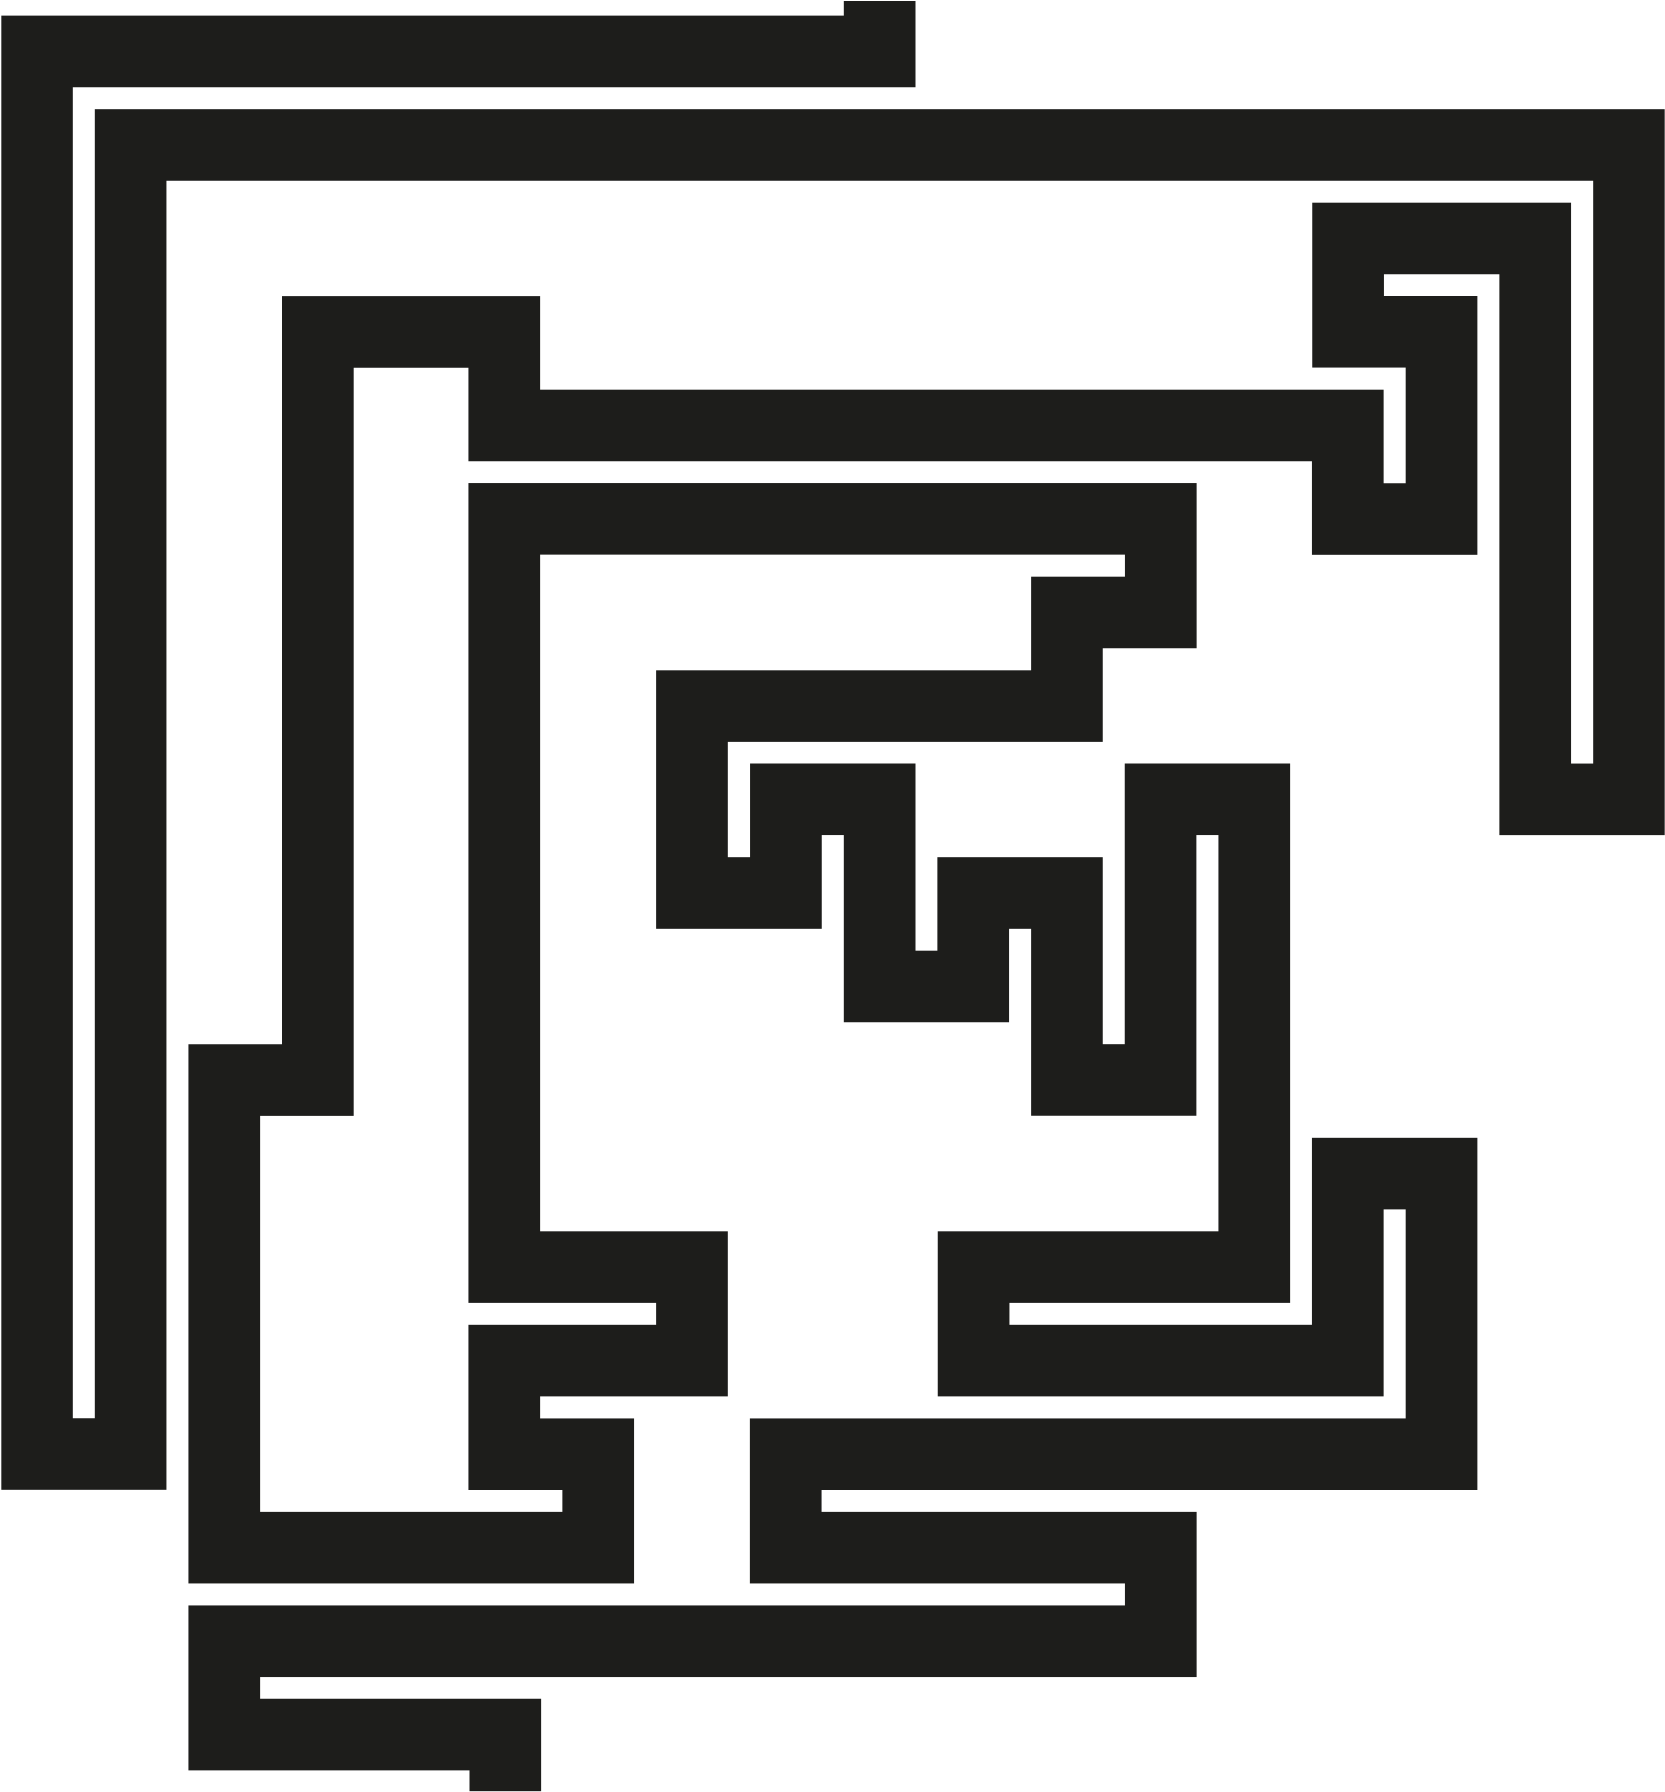 Labyrinth - 00 - 45 - - Labyrinth - 00 - 45 - (1800x1800)